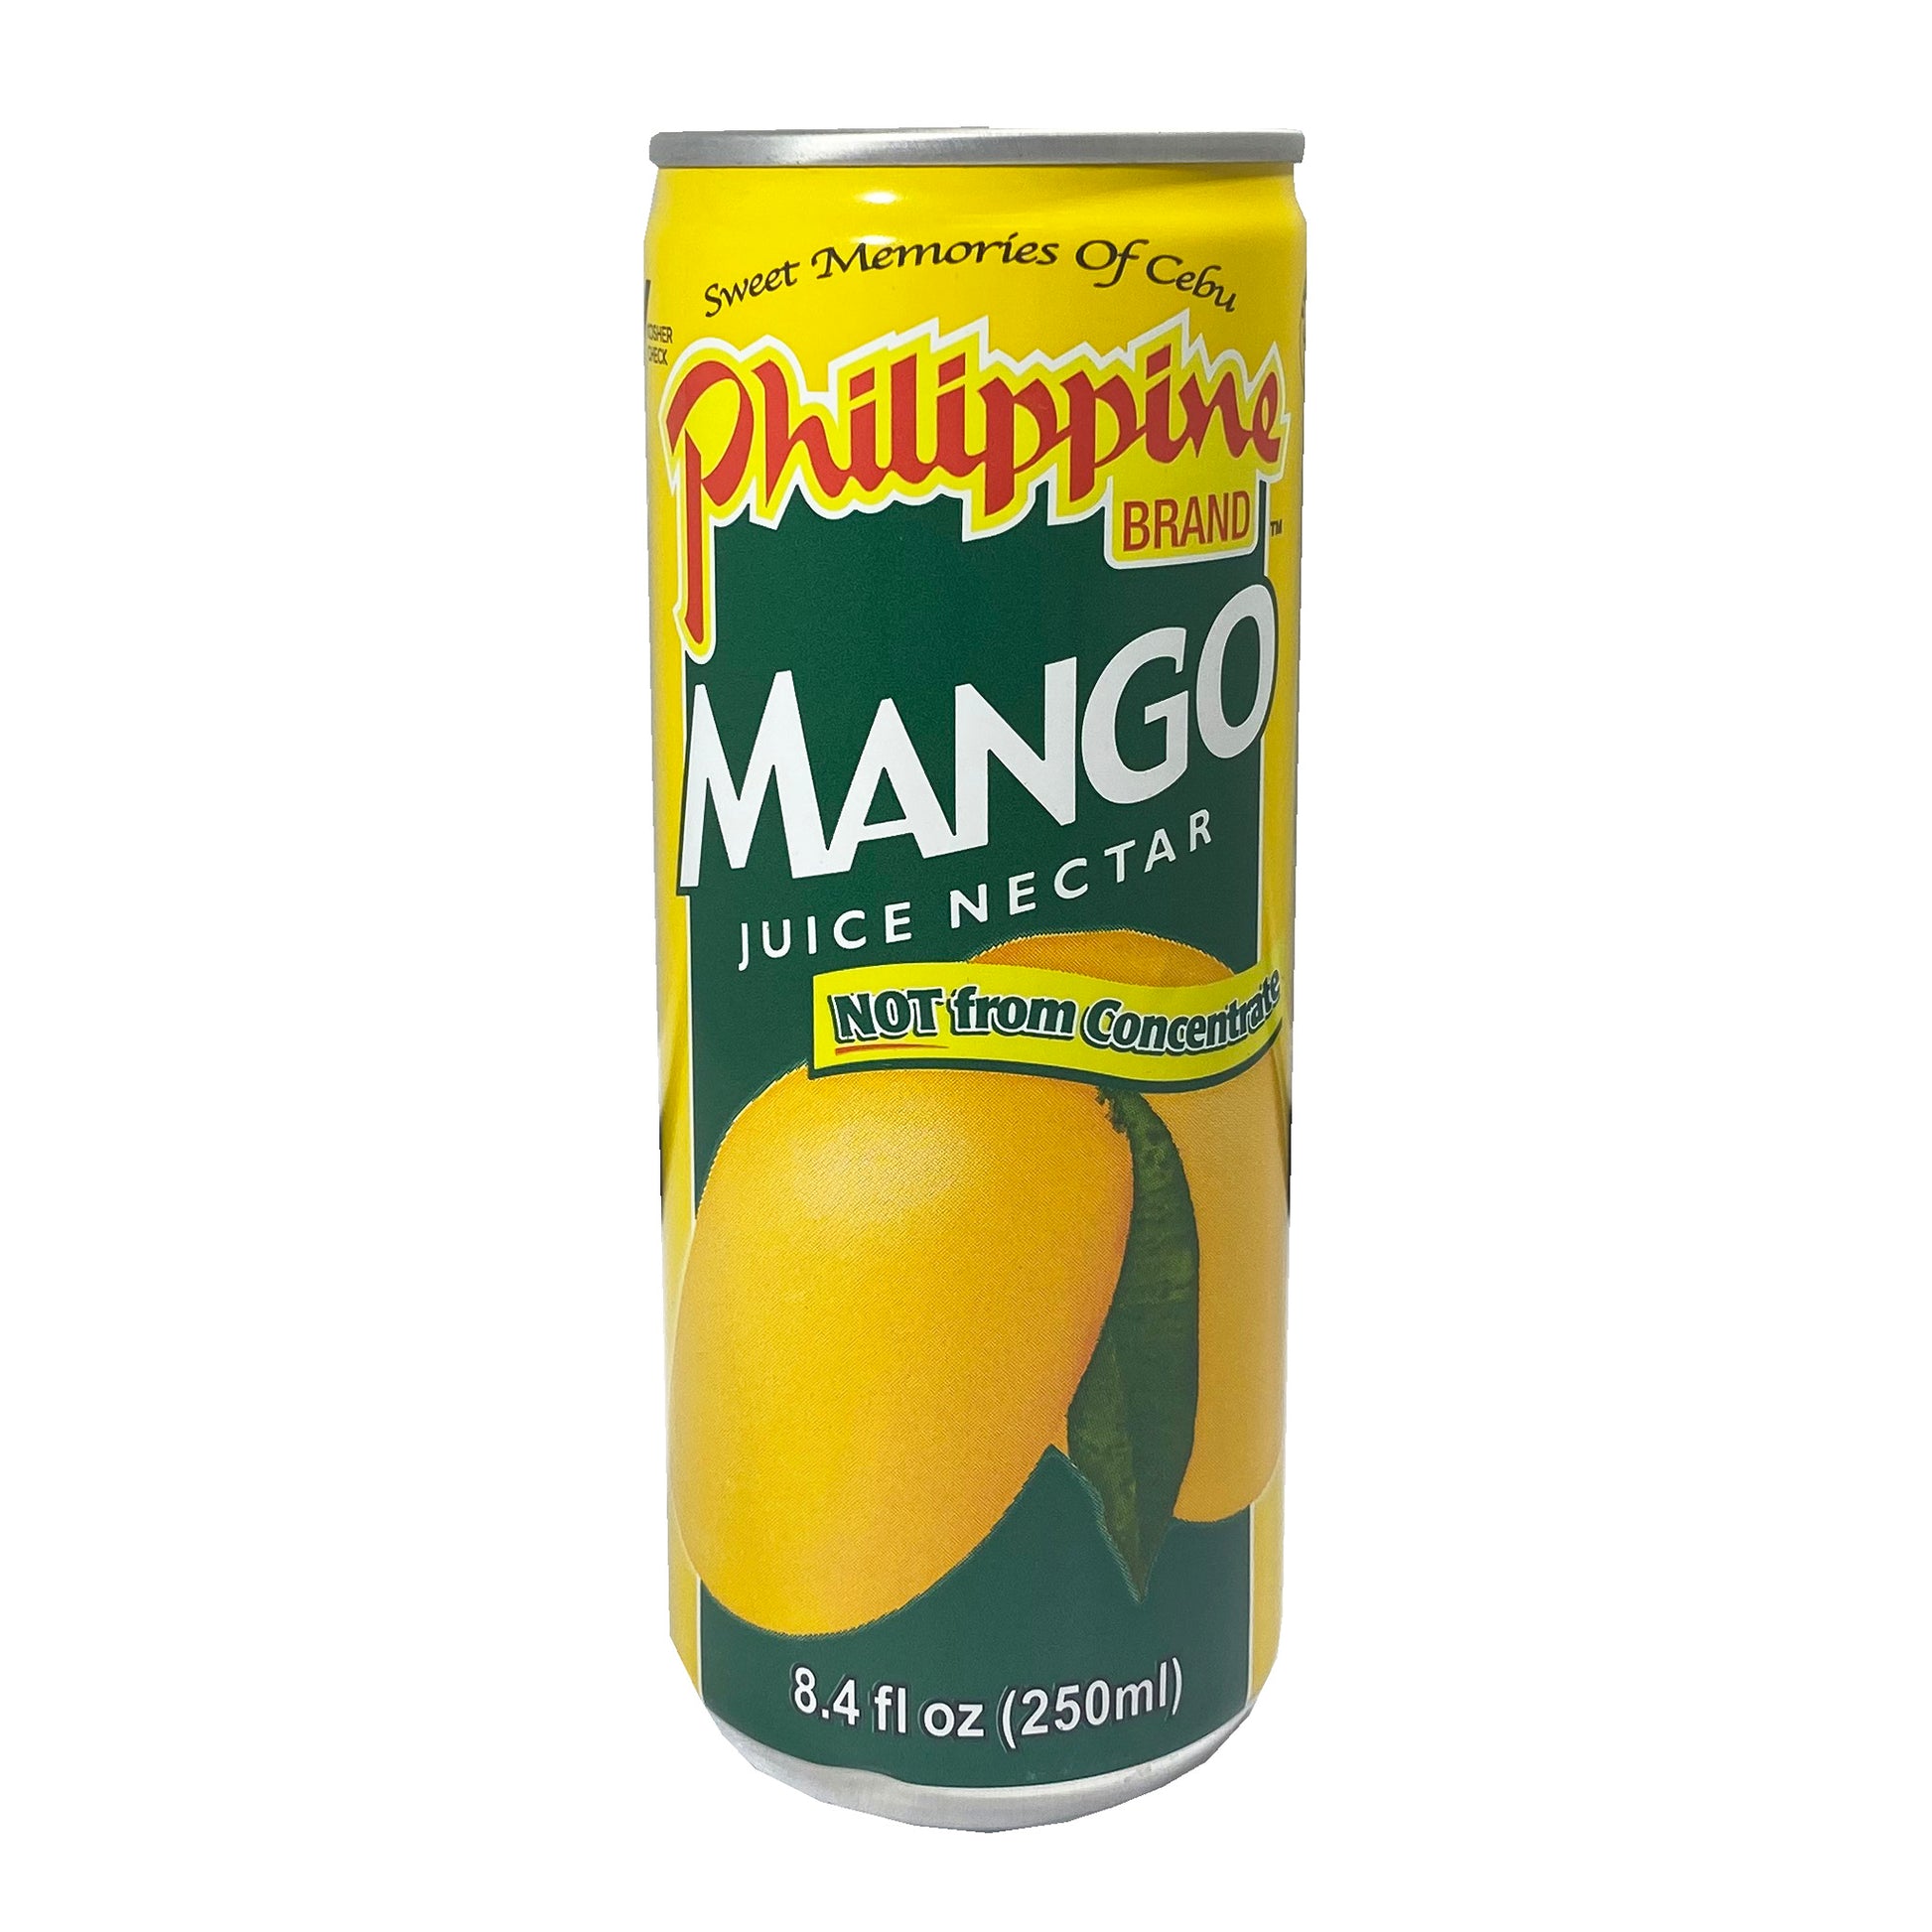 Front graphic image of Philippine Brand Mango Juice 8.4oz